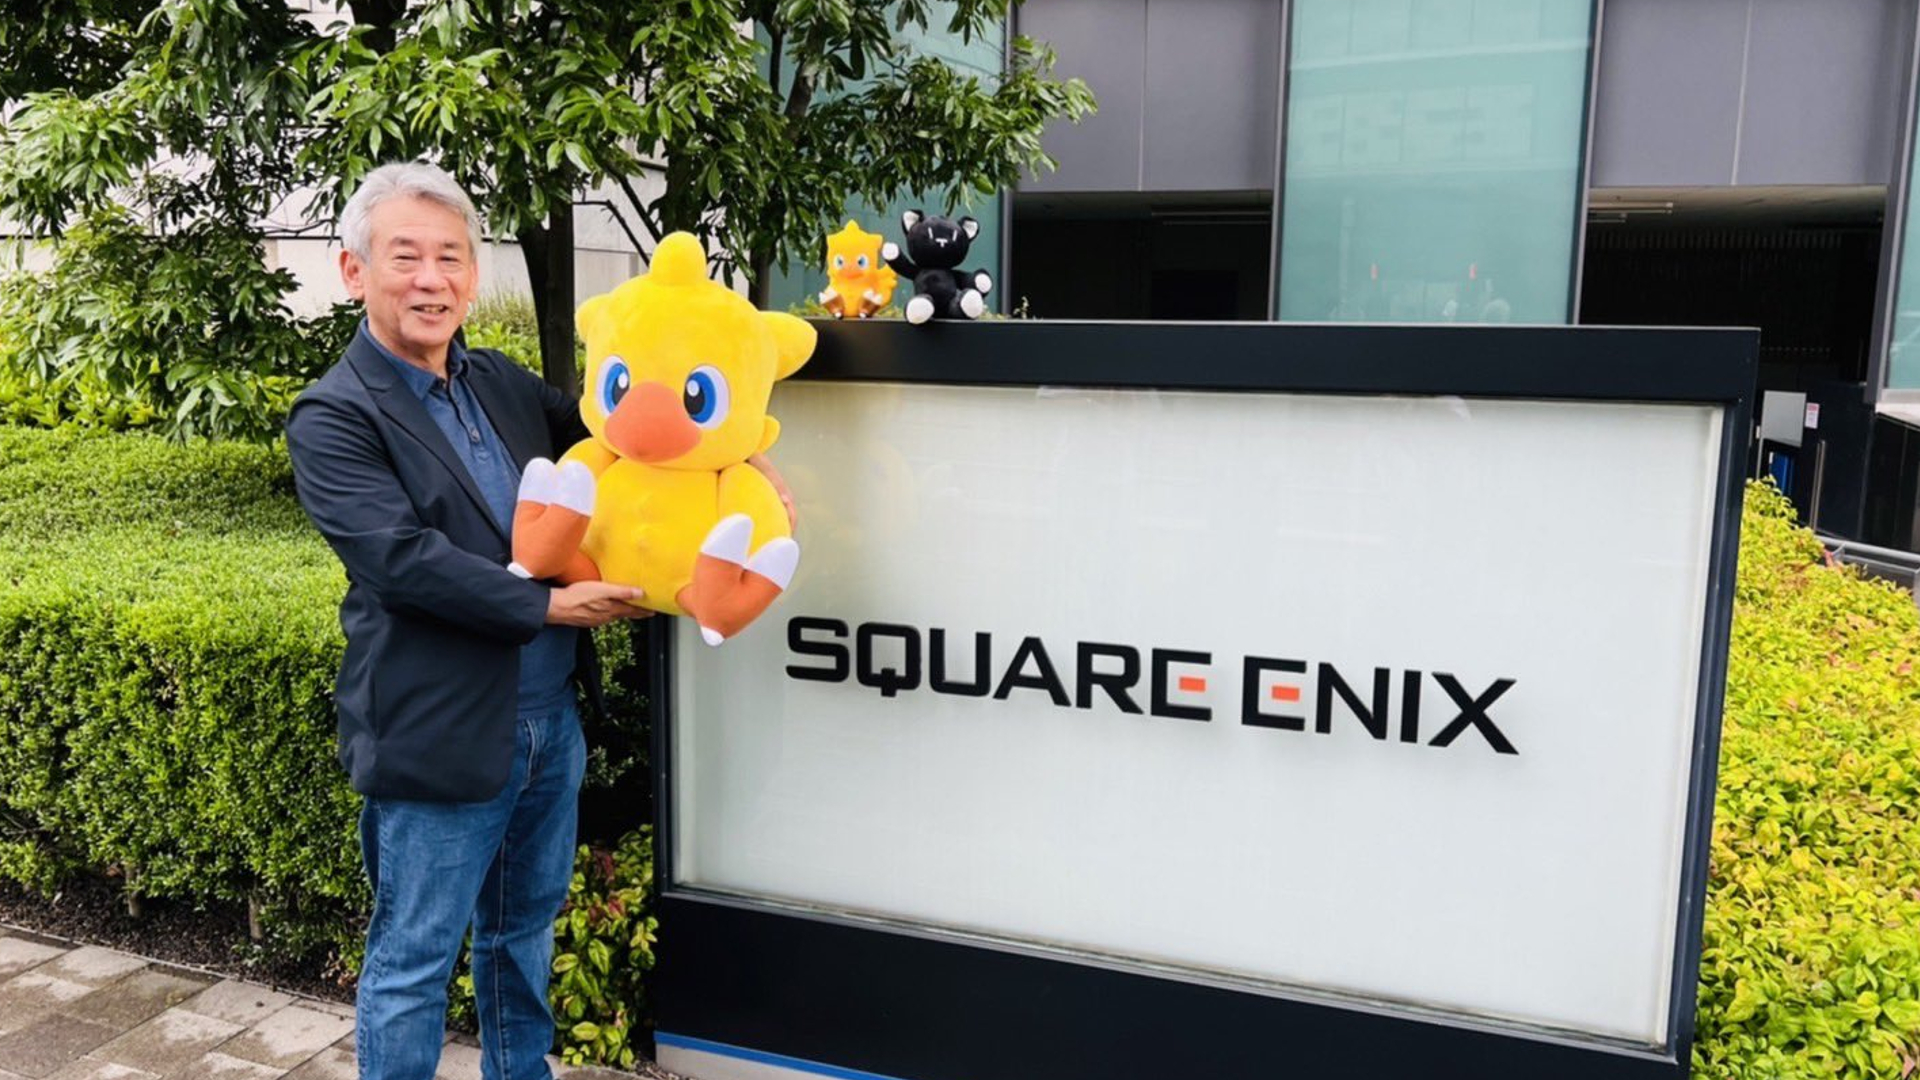  Kingdom Hearts co-creator Shinji Hashimoto retires after 28 years with Square Enix 